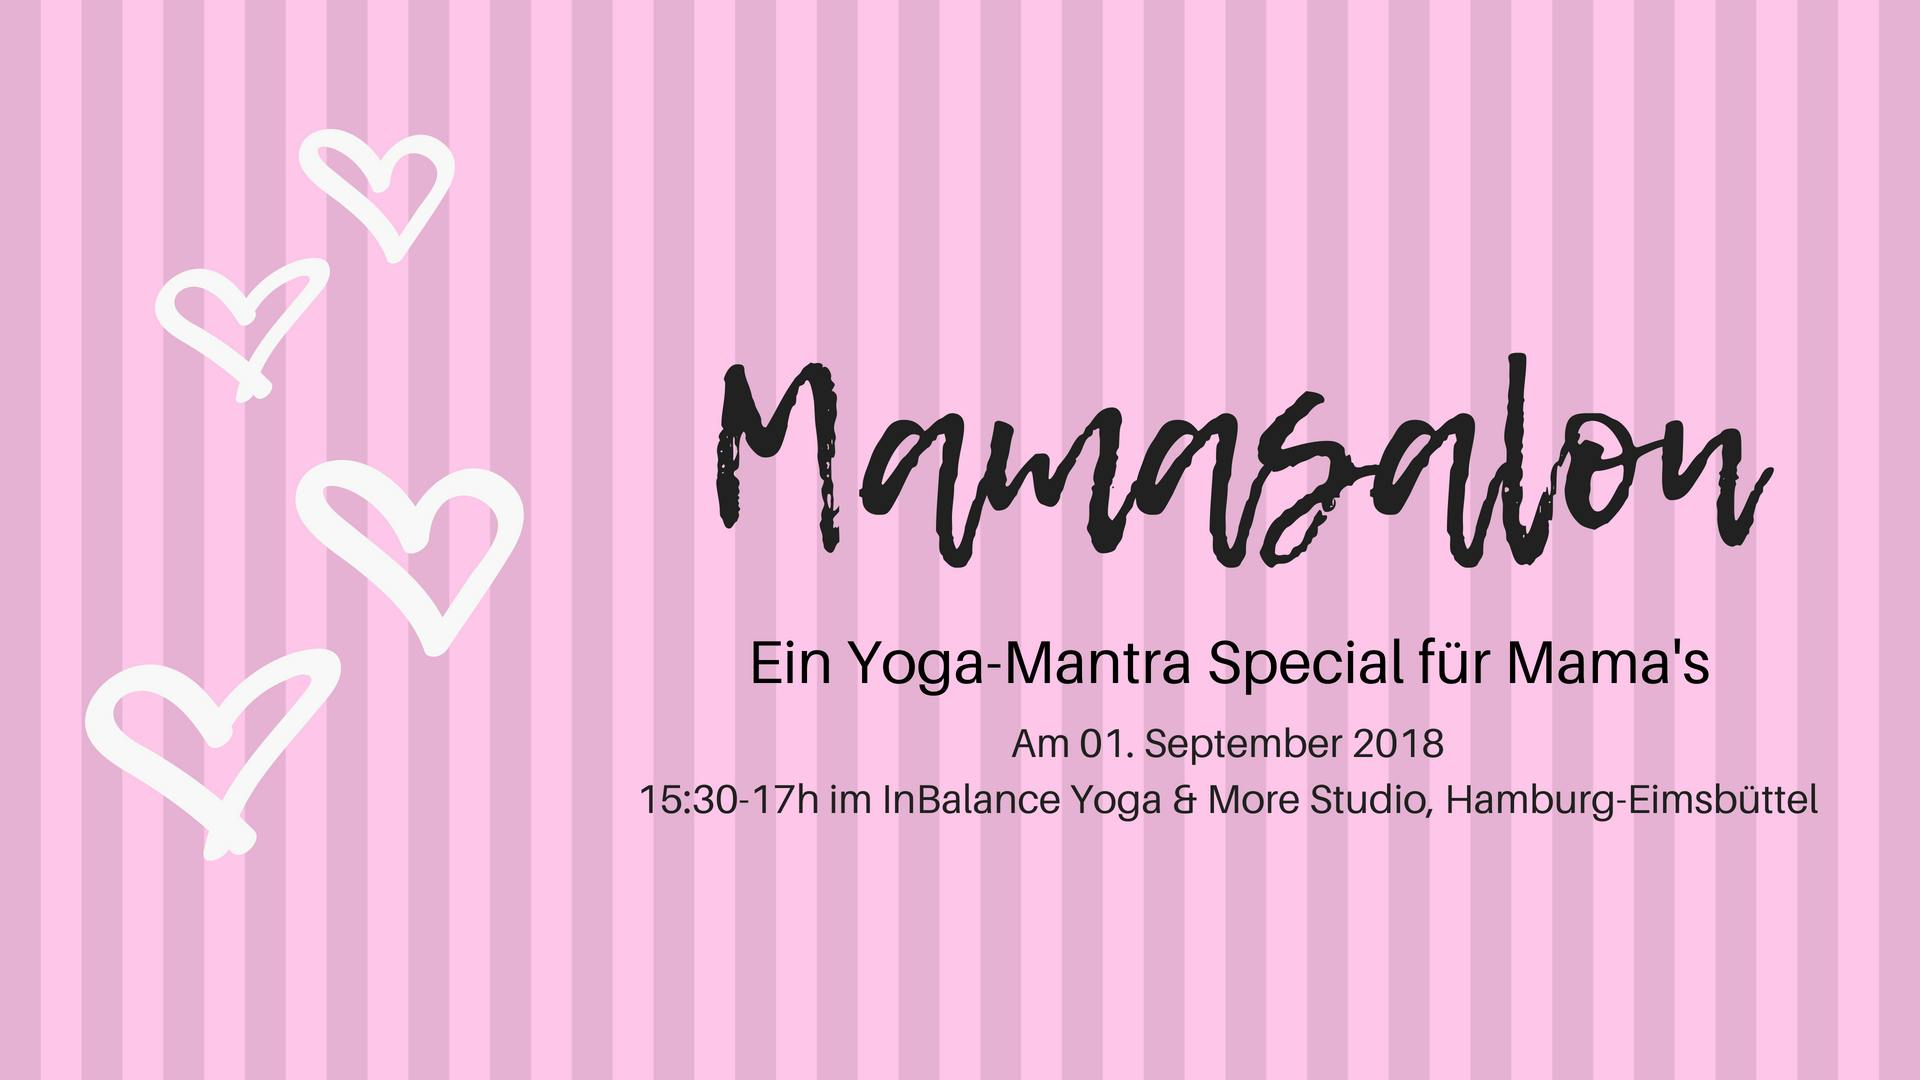 Mamasalon - Ein Yoga-Mantra Special für Mama's